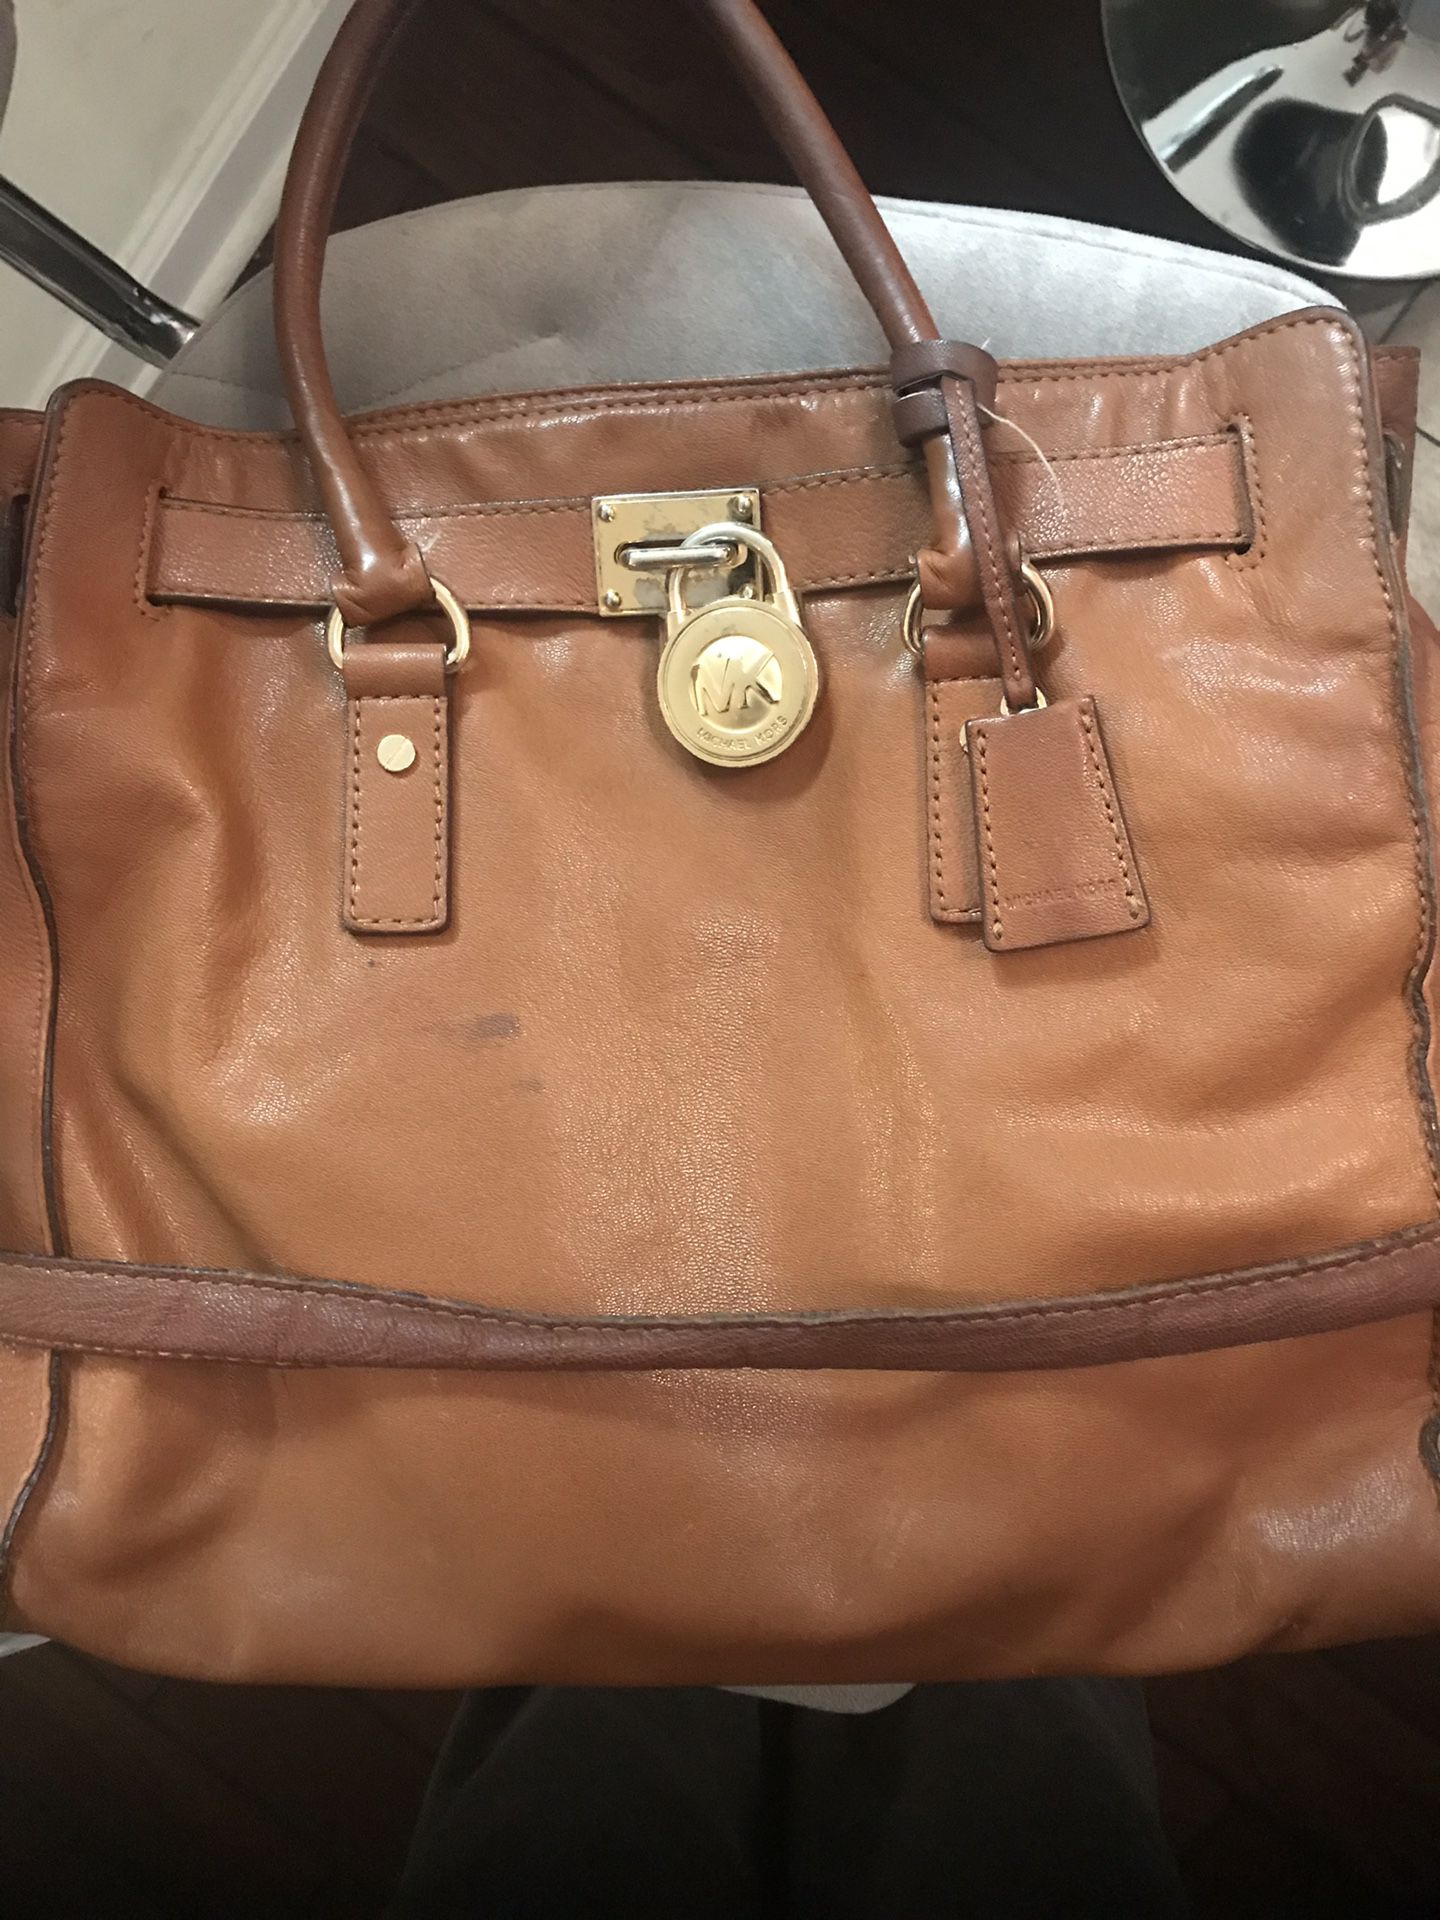 Michael Kors Hamilton purse